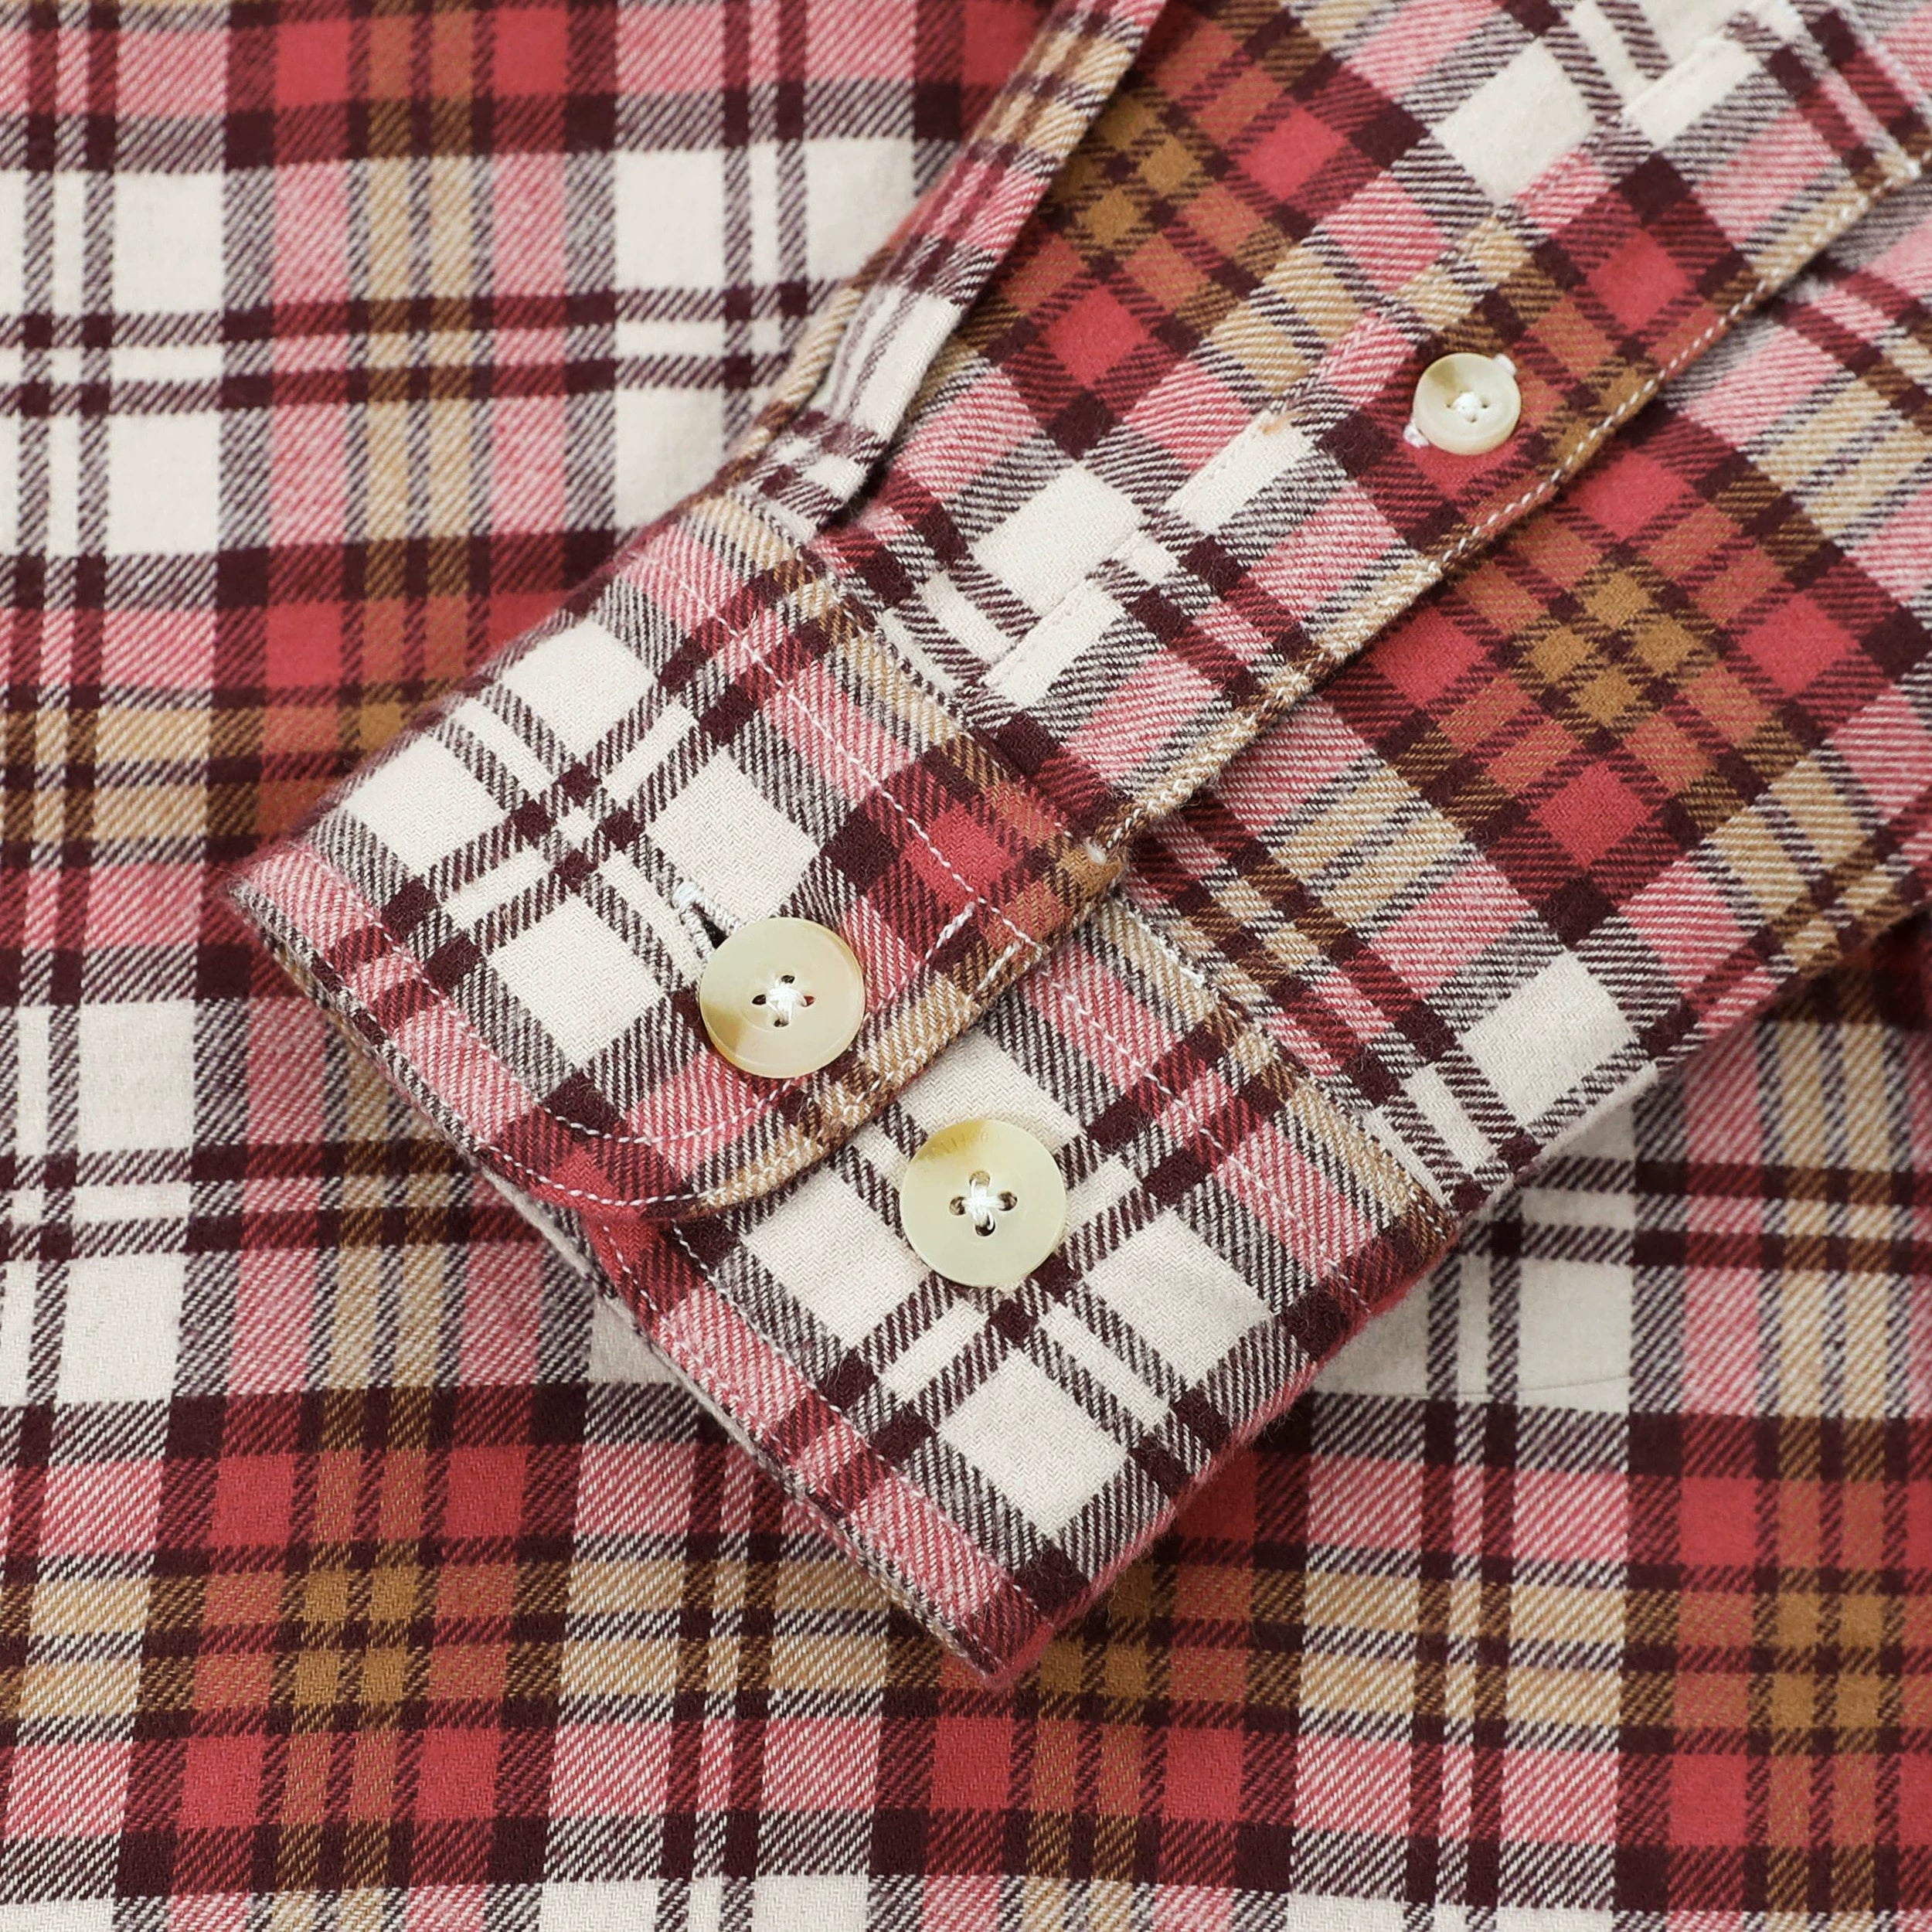 Dubinik®Mens Flannel Shirts Long Sleeve Flannel Shirt For Men Warm Casual Soft Cotton Button Down Plaid Mens Flannel Shirt #3410